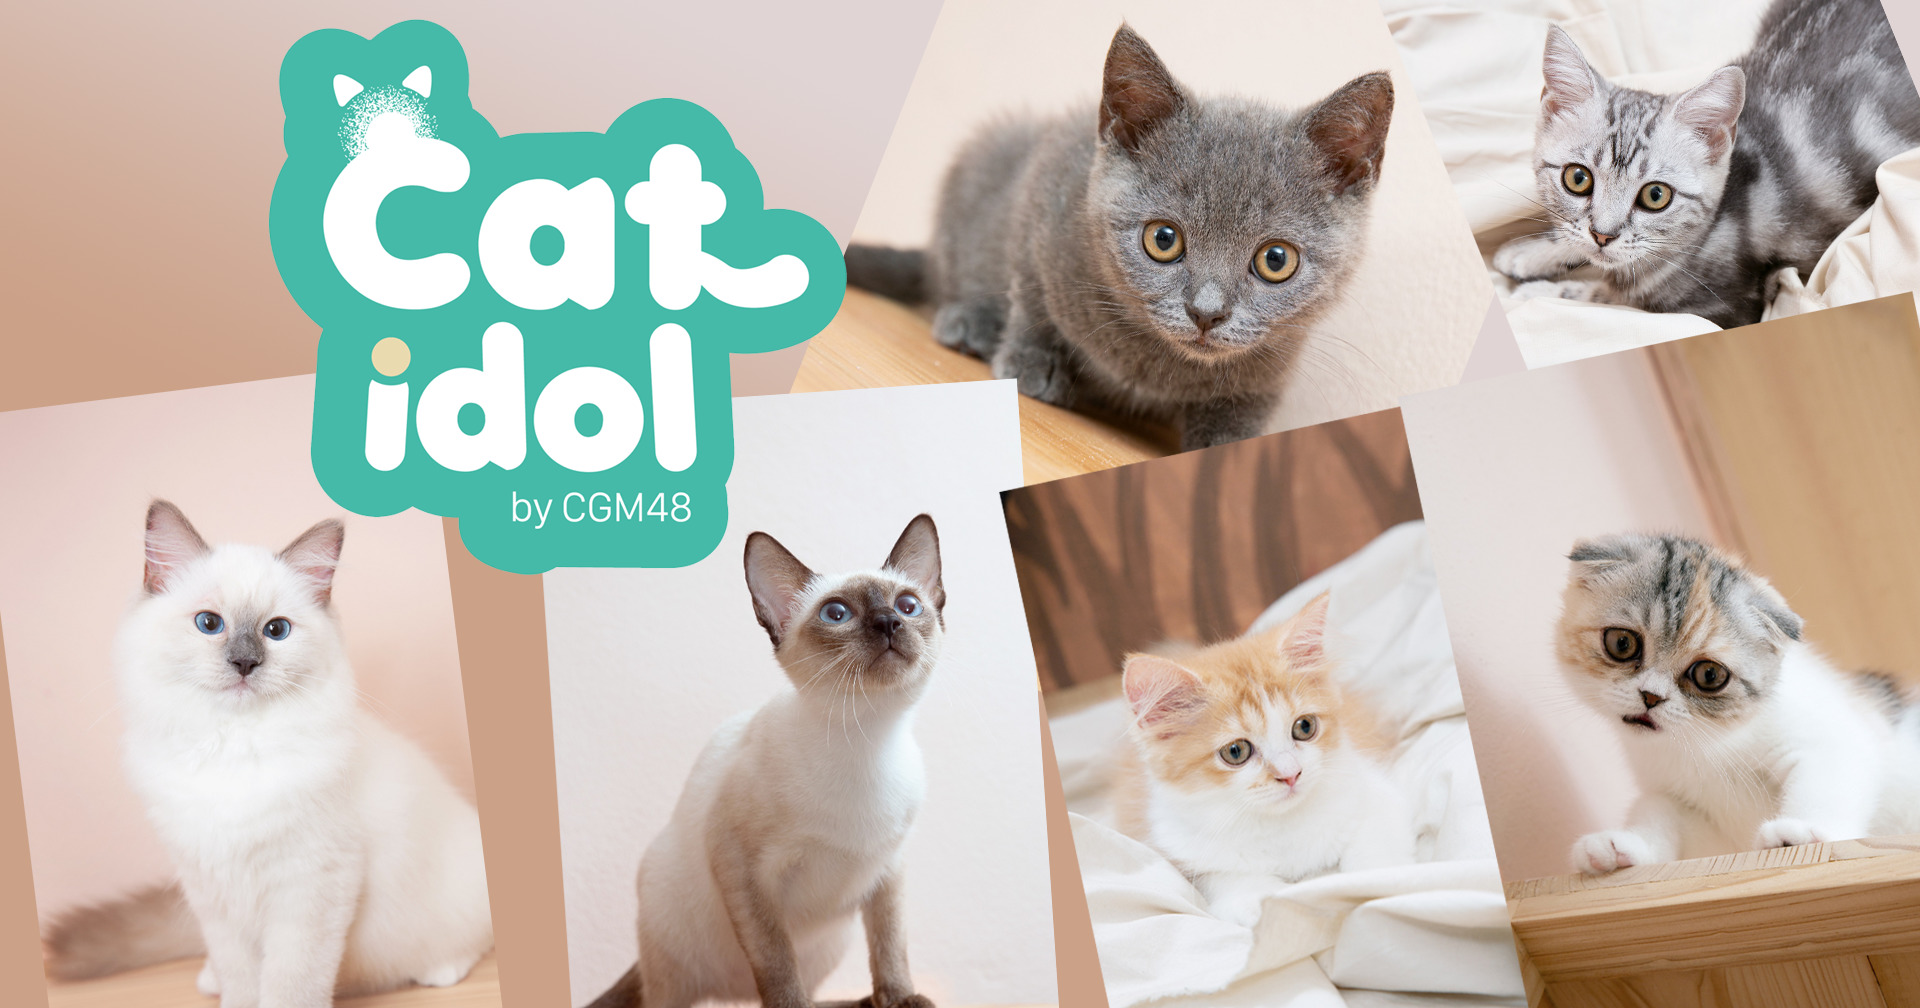 CGM48 เจ๋งผุดโครงการ CAT IDOL by CGM48 เอาใจทาสแมว